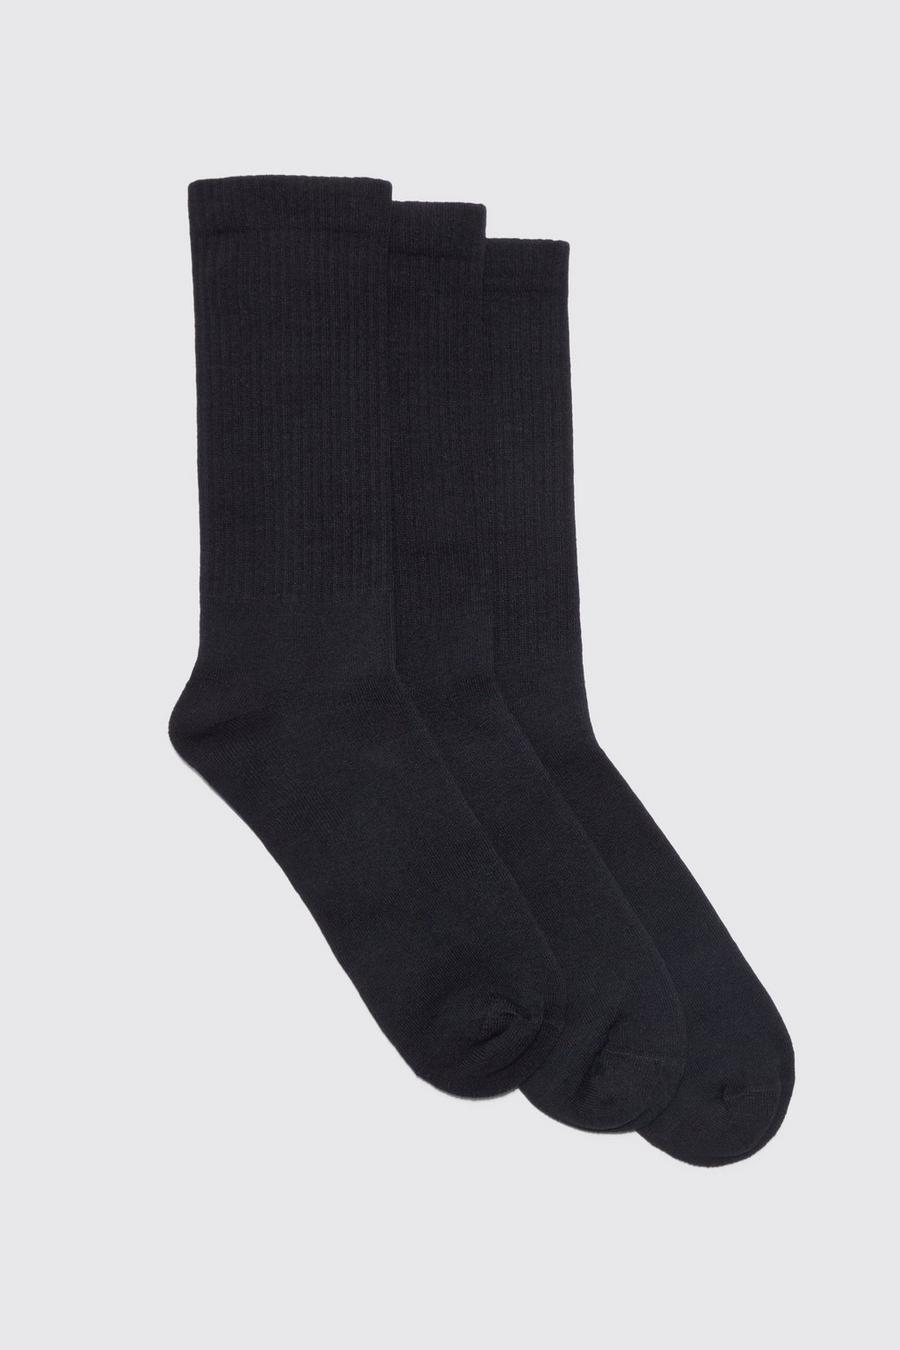 Pack de 3 pares de calcetines deportivos lisos, Black image number 1